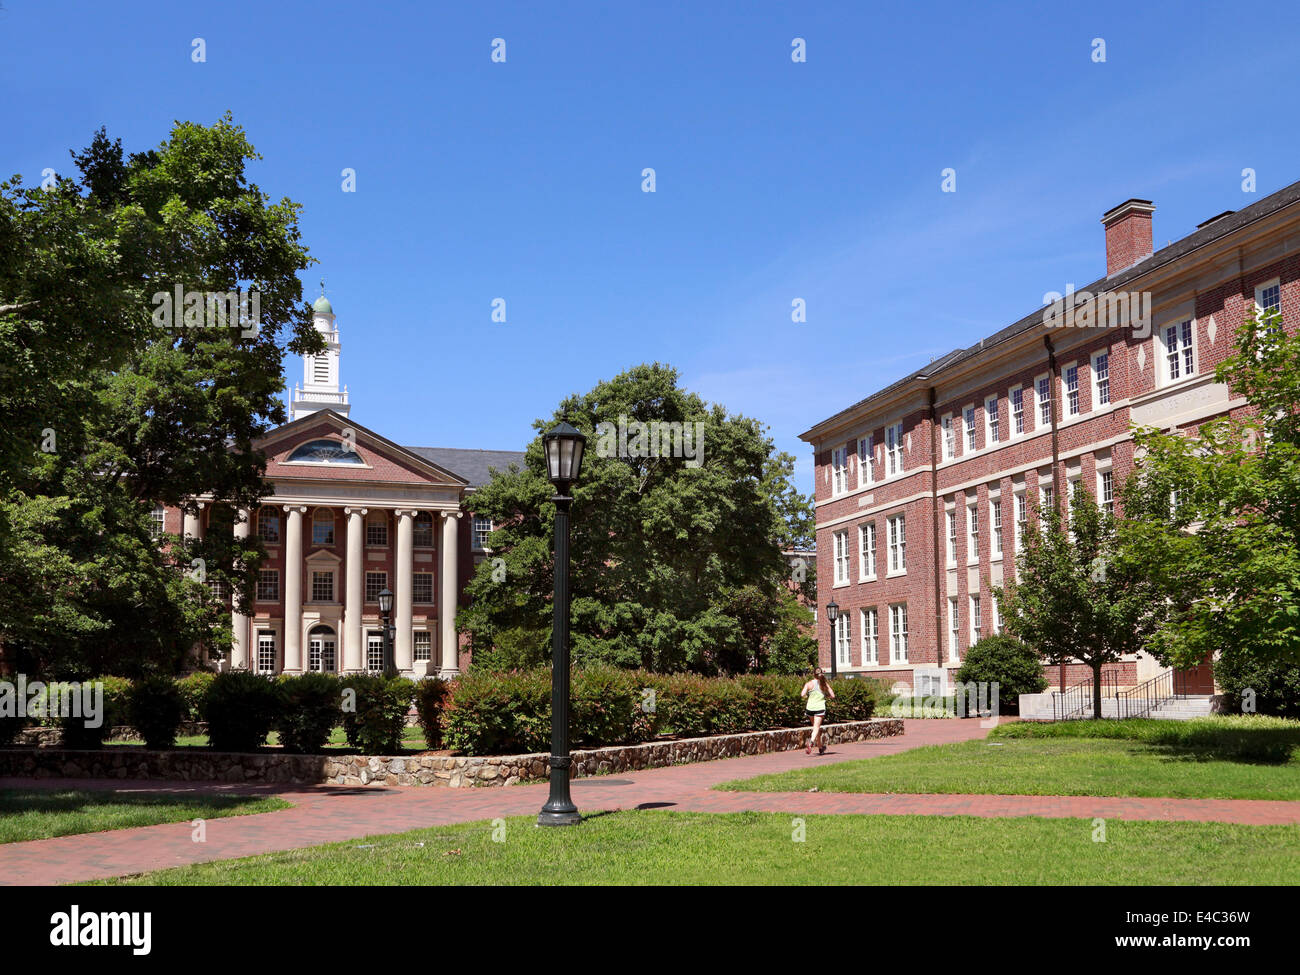 University of North Carolina at Chapel Hill, UNC, campus. Stock Photo